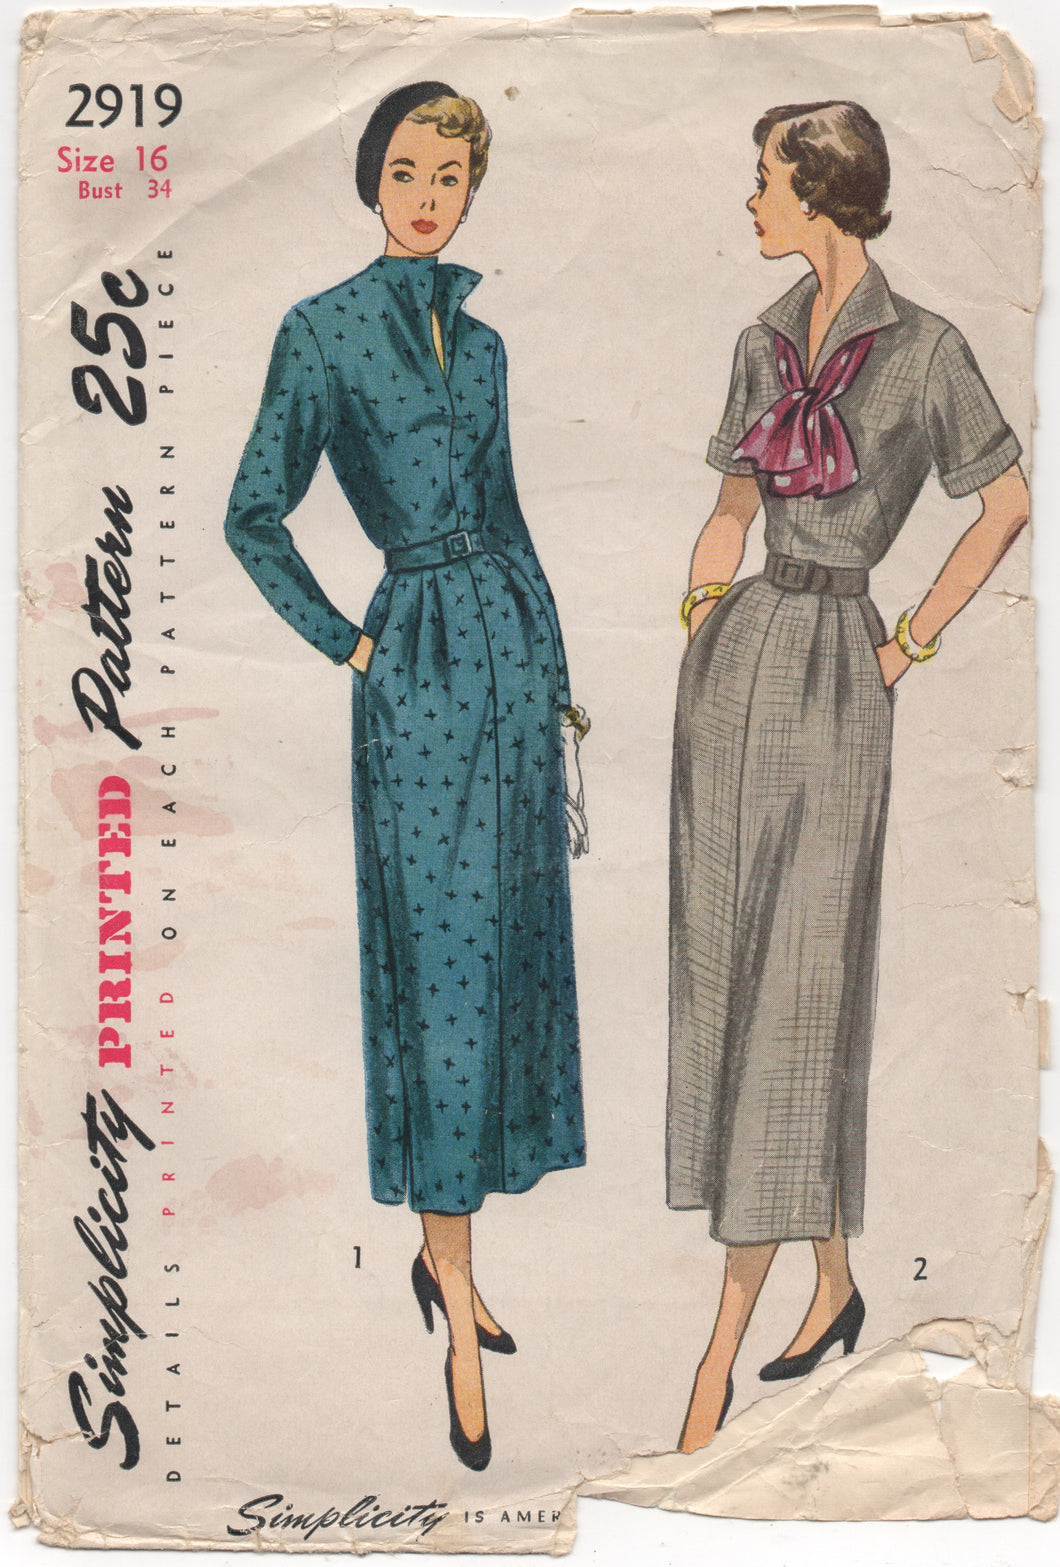 1940’s Simplicity High Self Collar One Piece Dress - Bust 34” - No. 2919